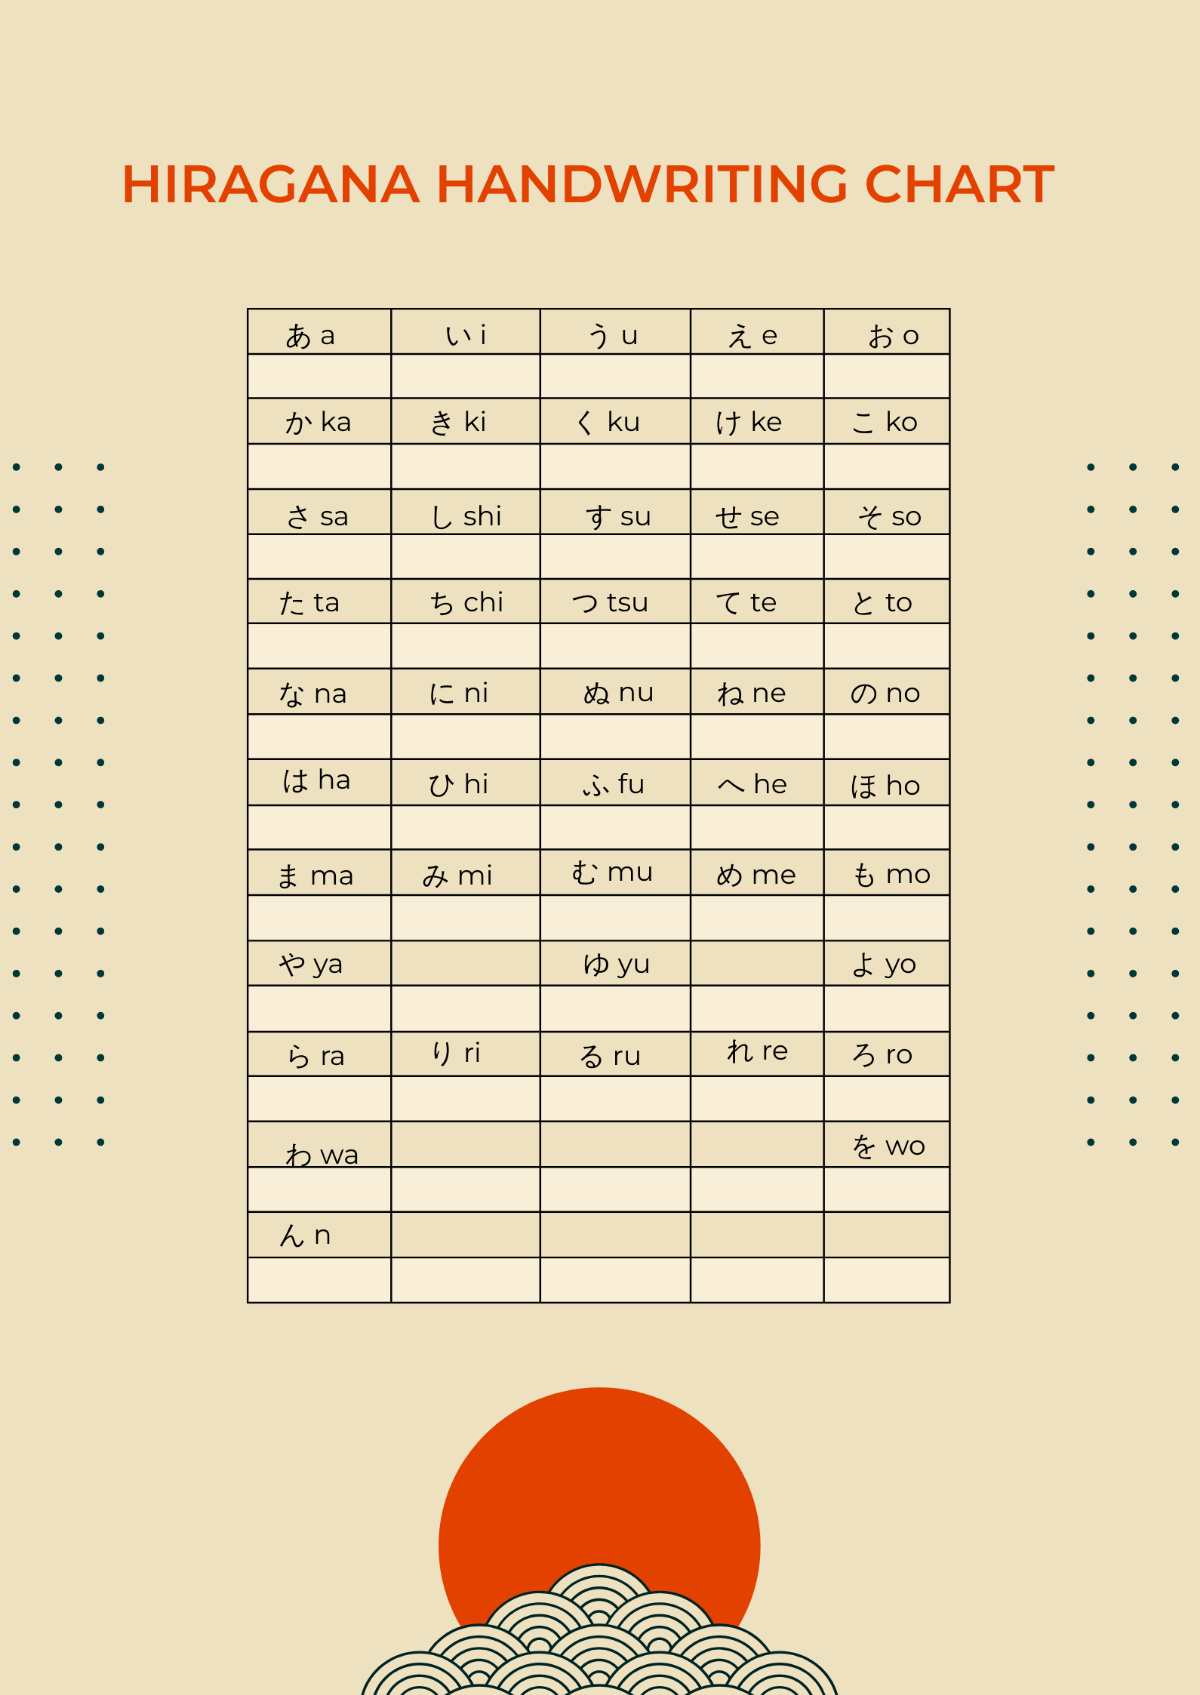 Hiragana Handwriting Chart Template